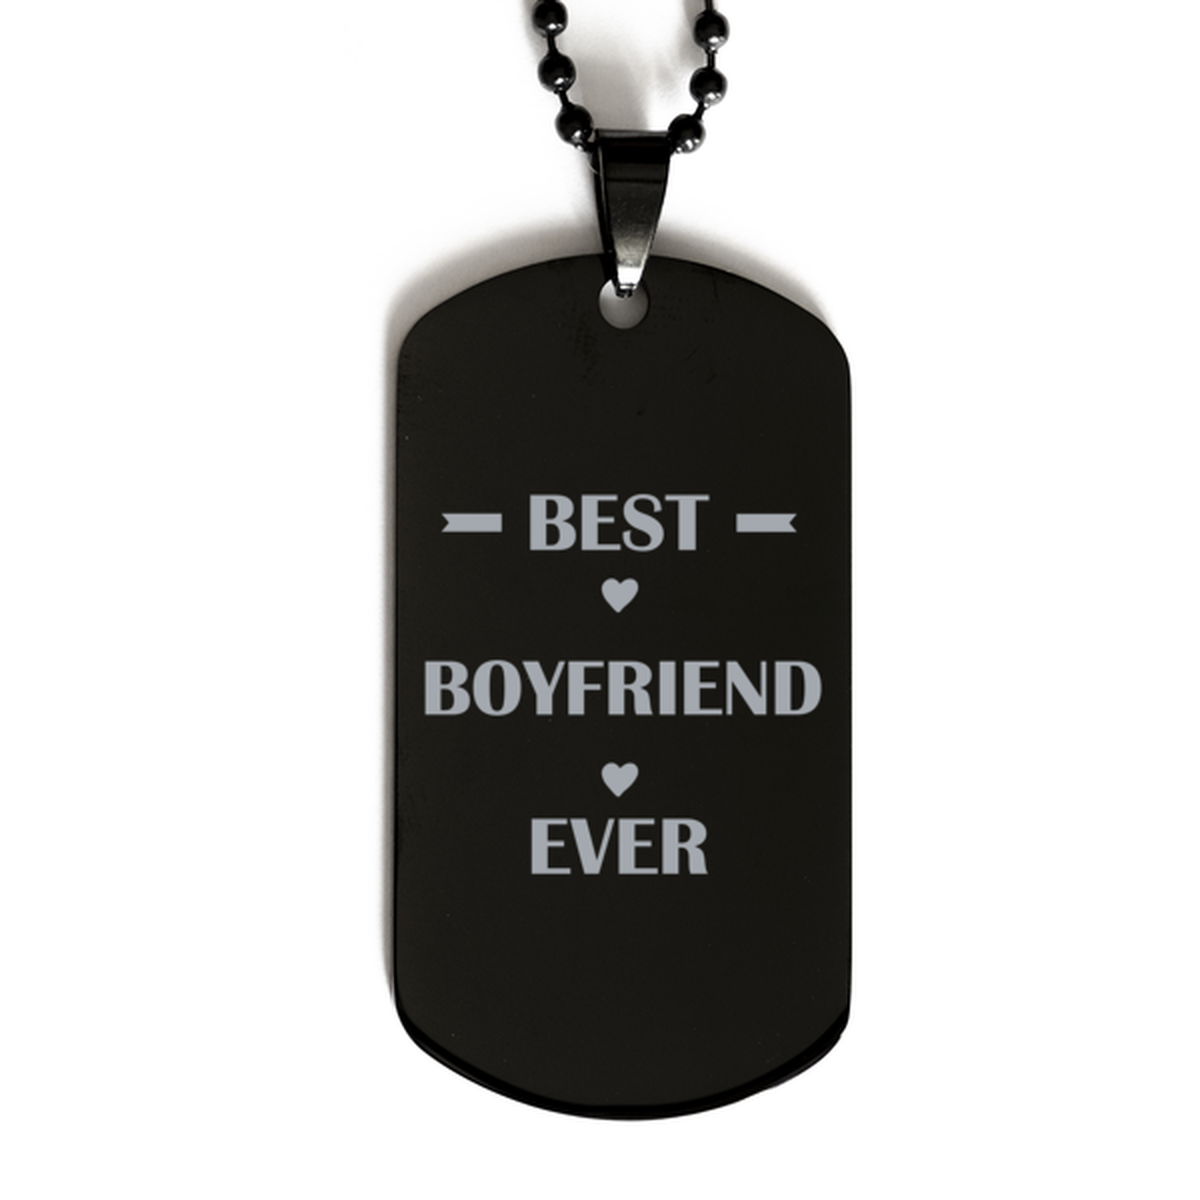 Best Boyfriend Ever Boyfriend Gifts, Funny Black Dog Tag For Boyfriend, Birthday Family Presents Engraved Necklace For Men